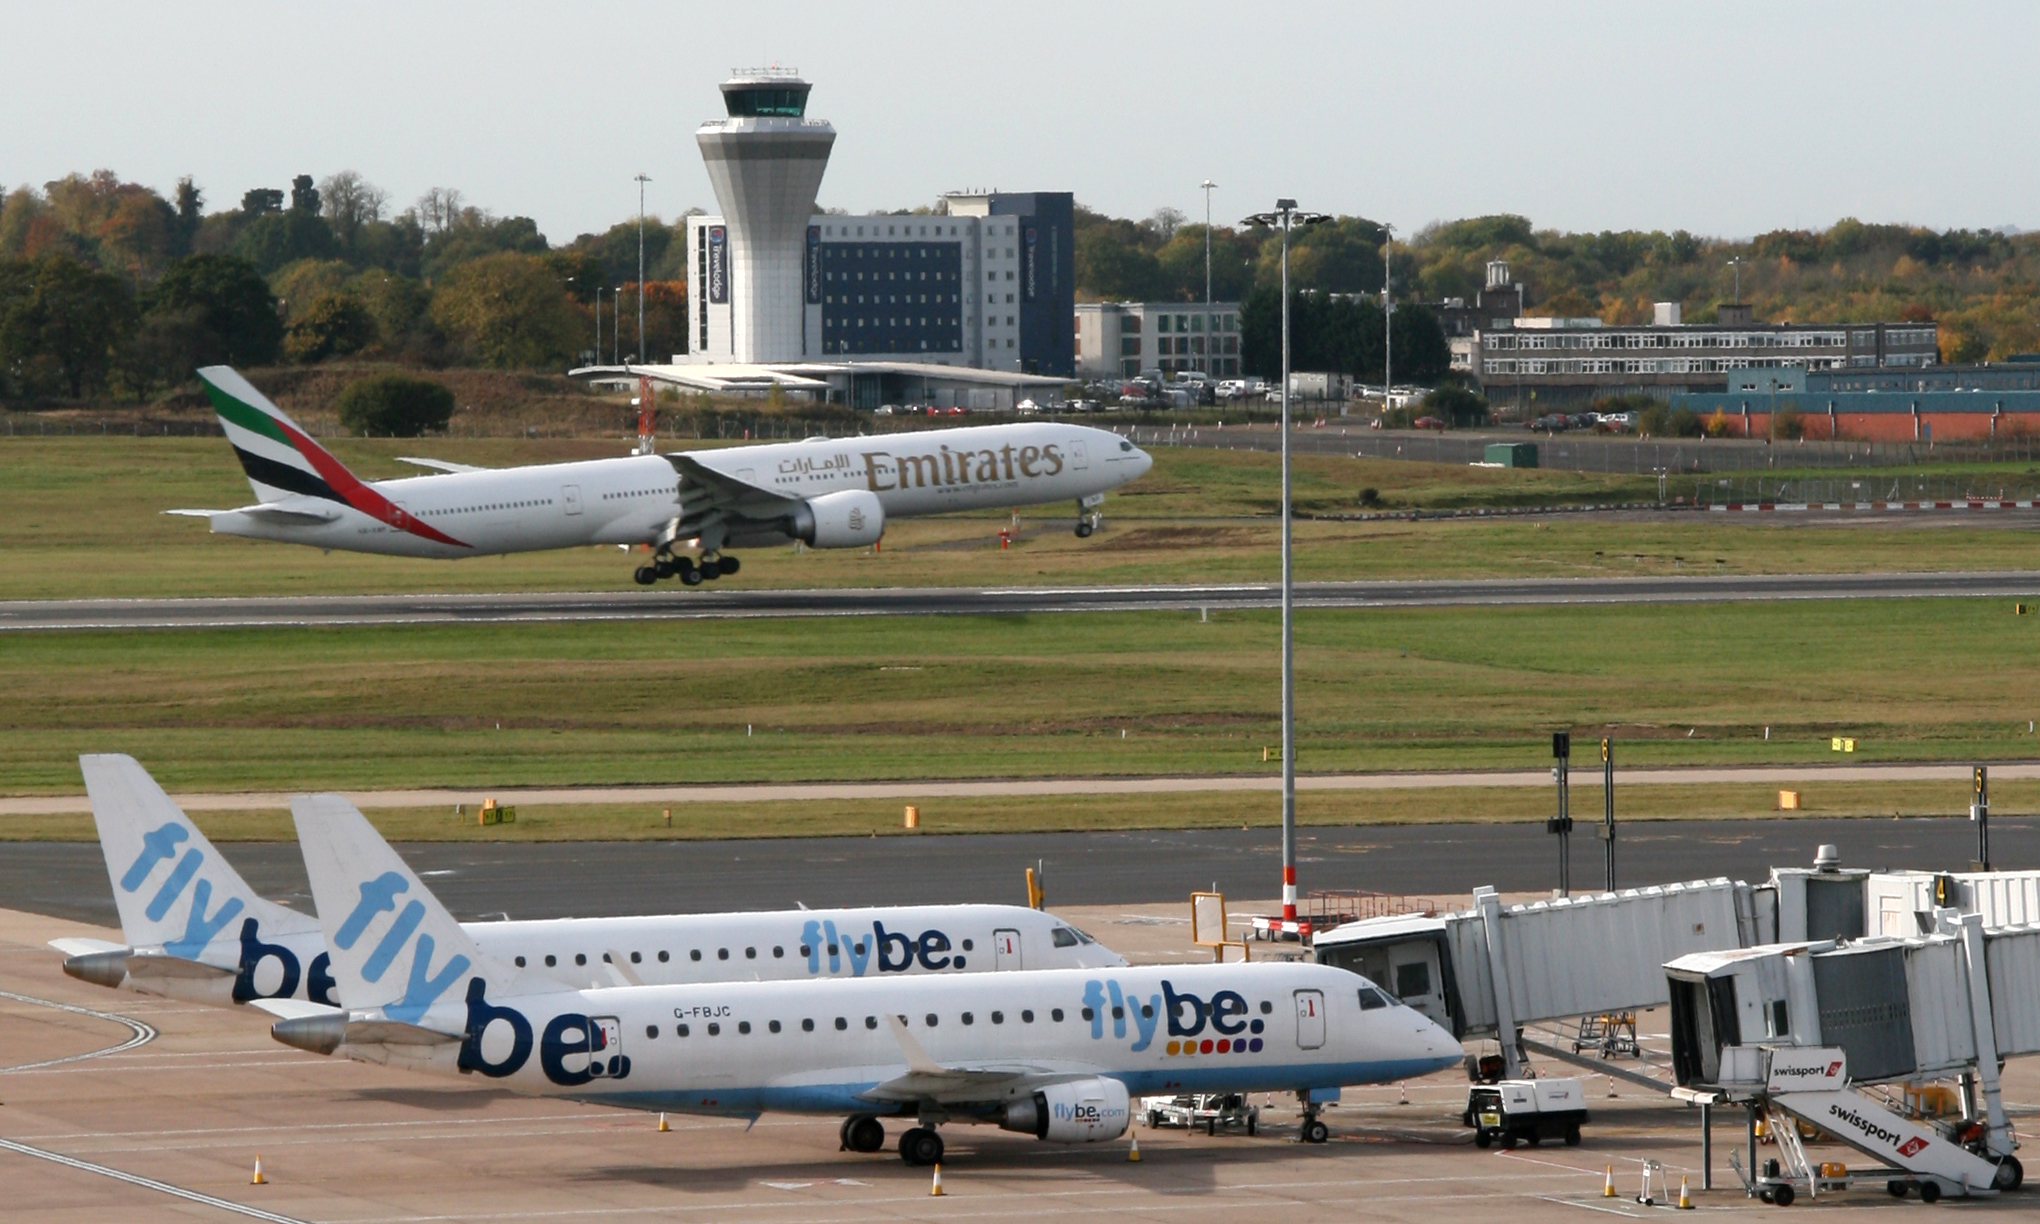 Birmingham airport tower and runway